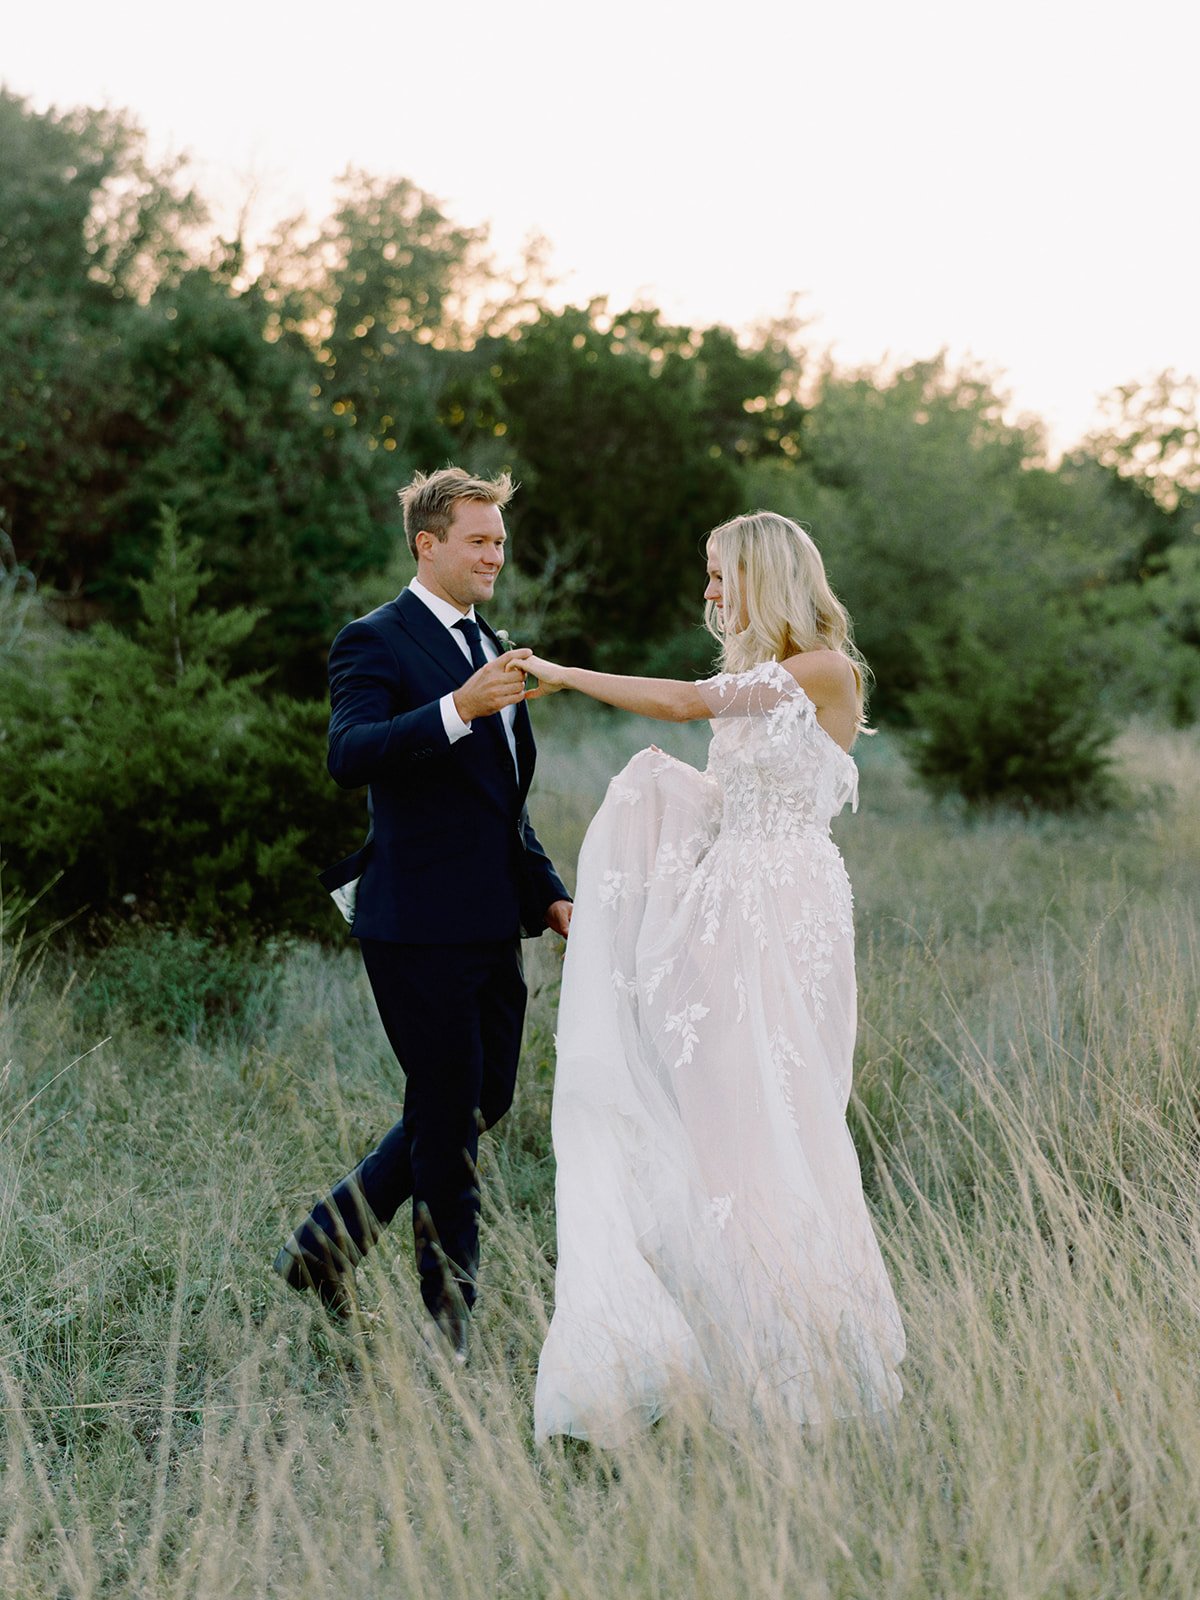 Best-Austin-Wedding-Photographers-Elopement-Film-35mm-Asheville-Santa-Barbara-Backyard-129.jpg